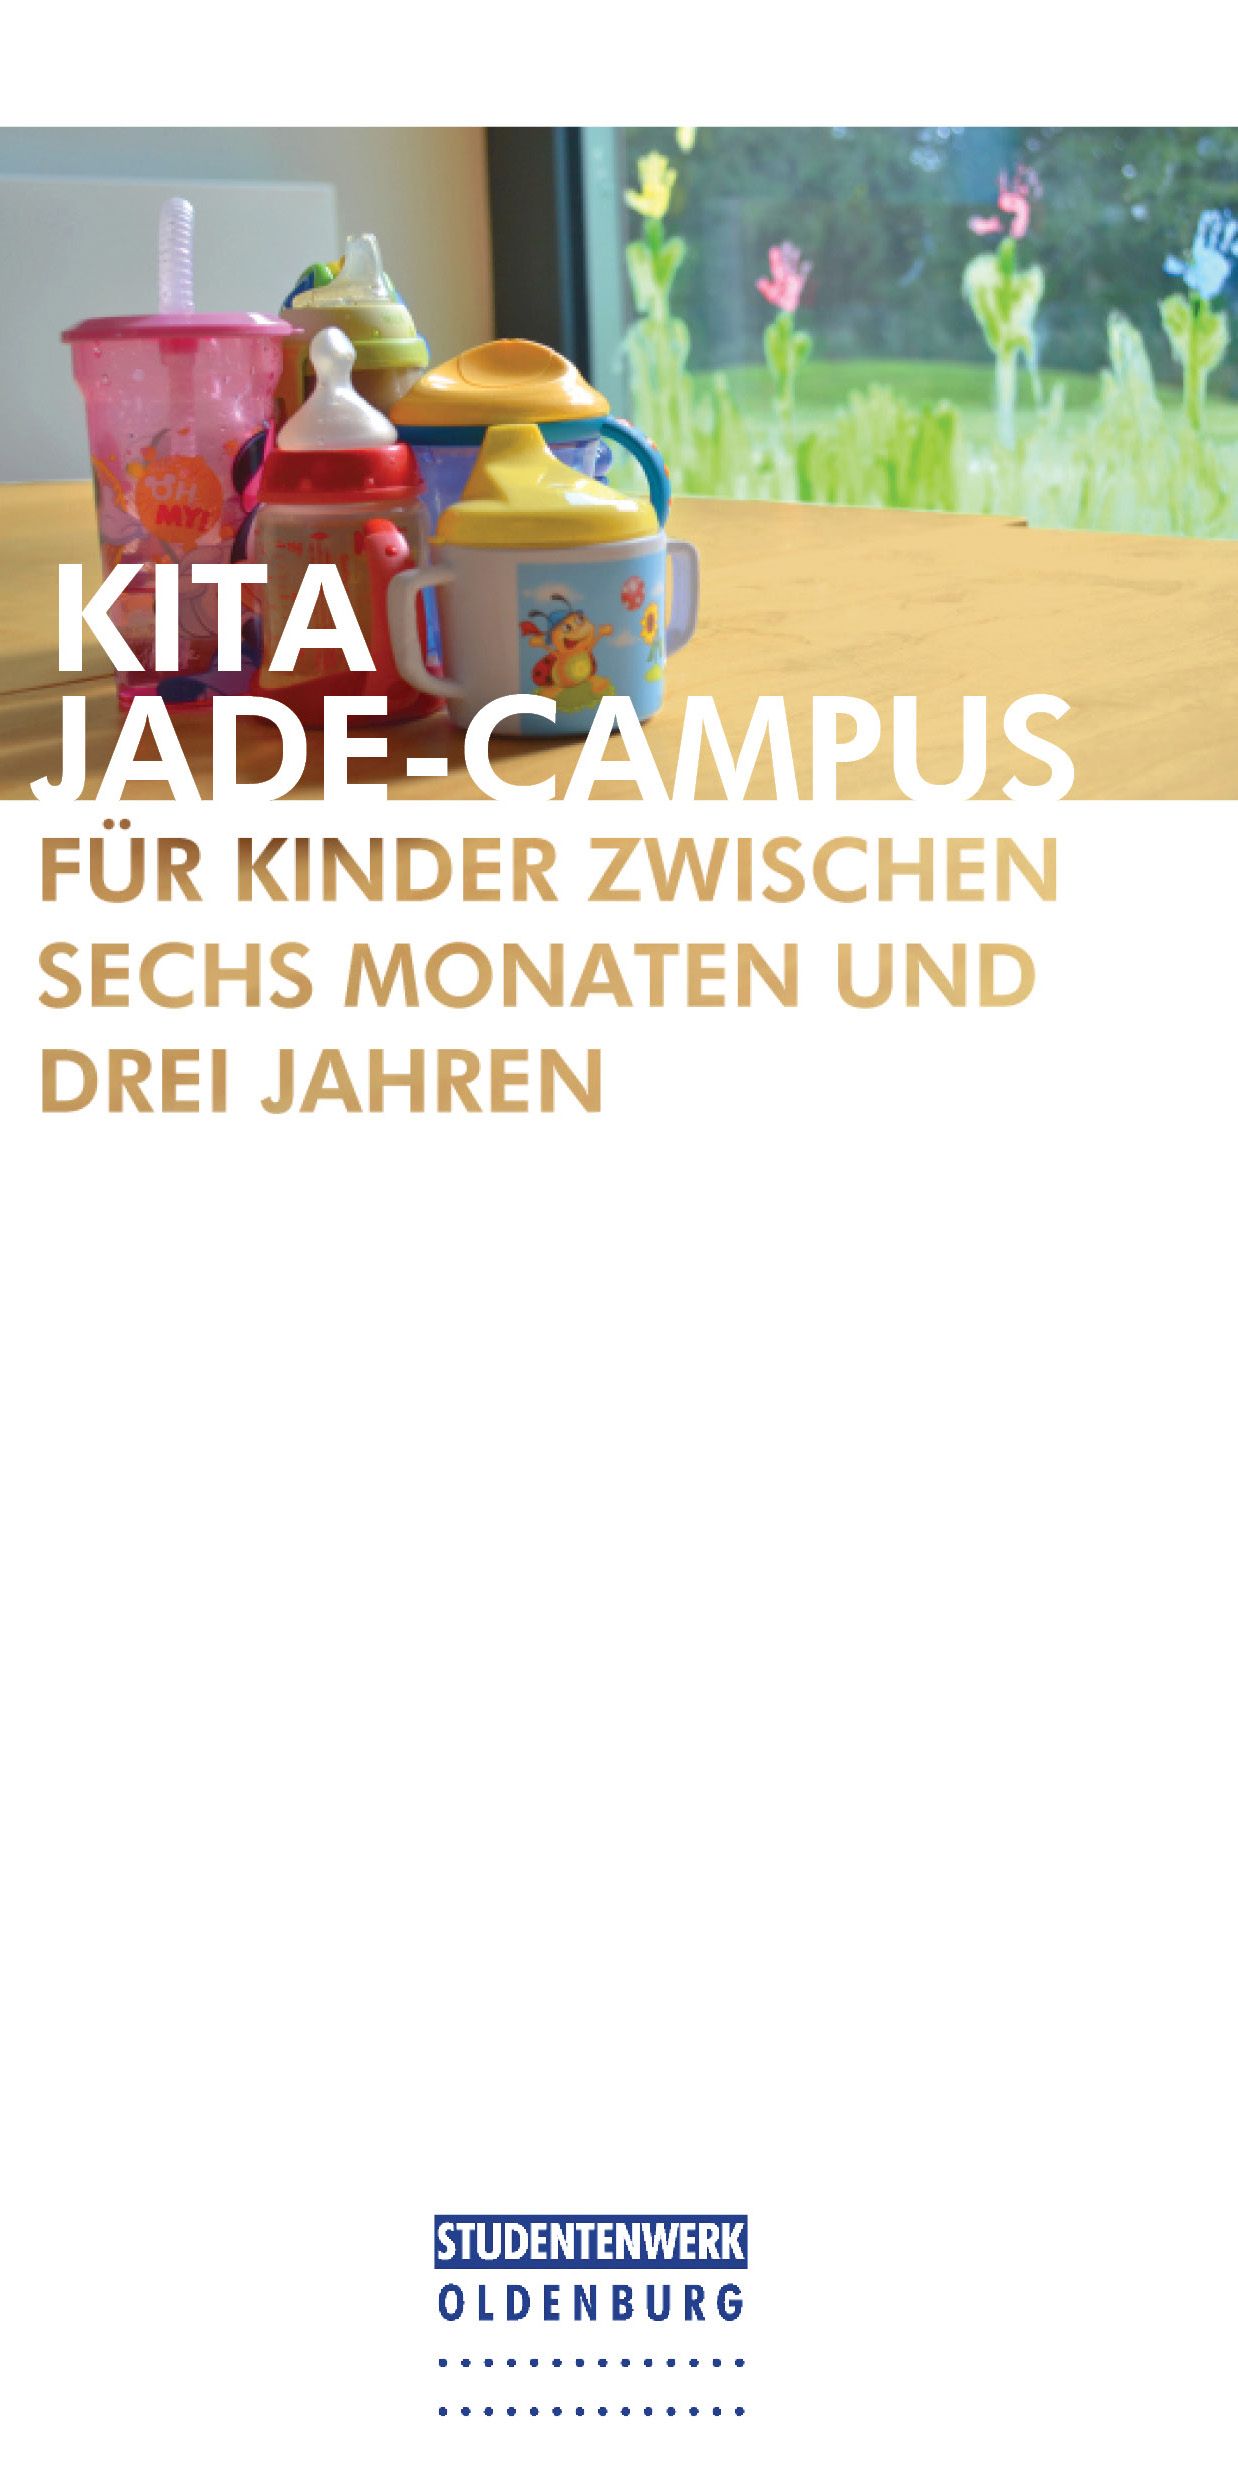 Kita Jade-Campus Wilhelmshaven